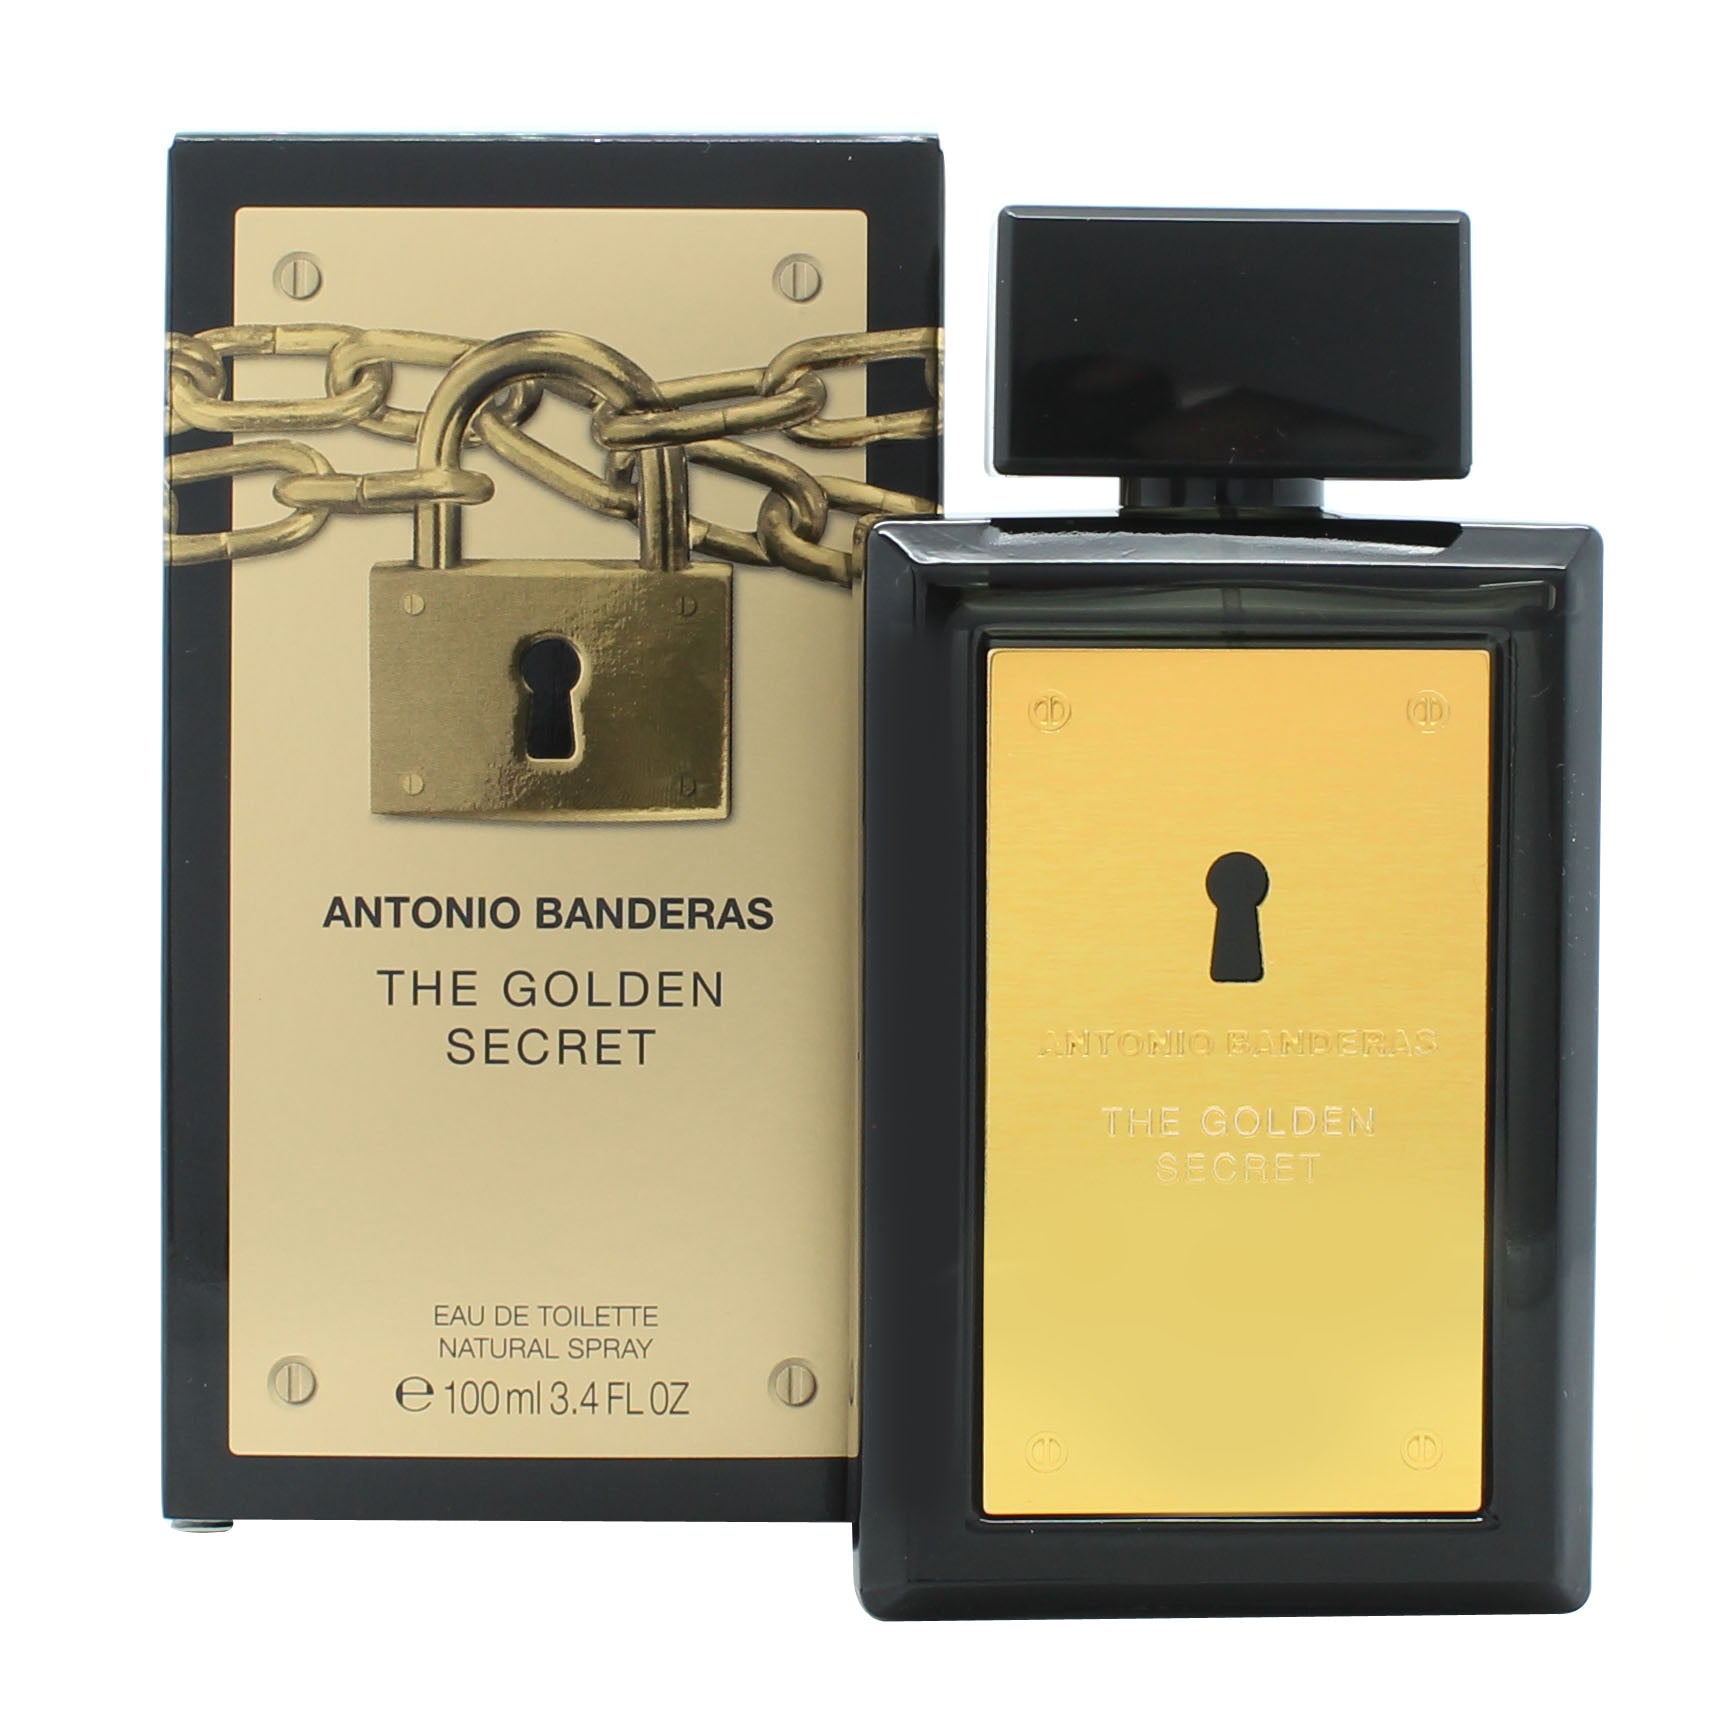 View Antonio Banderas The Golden Secret Eau de Toilette 100ml Spray information